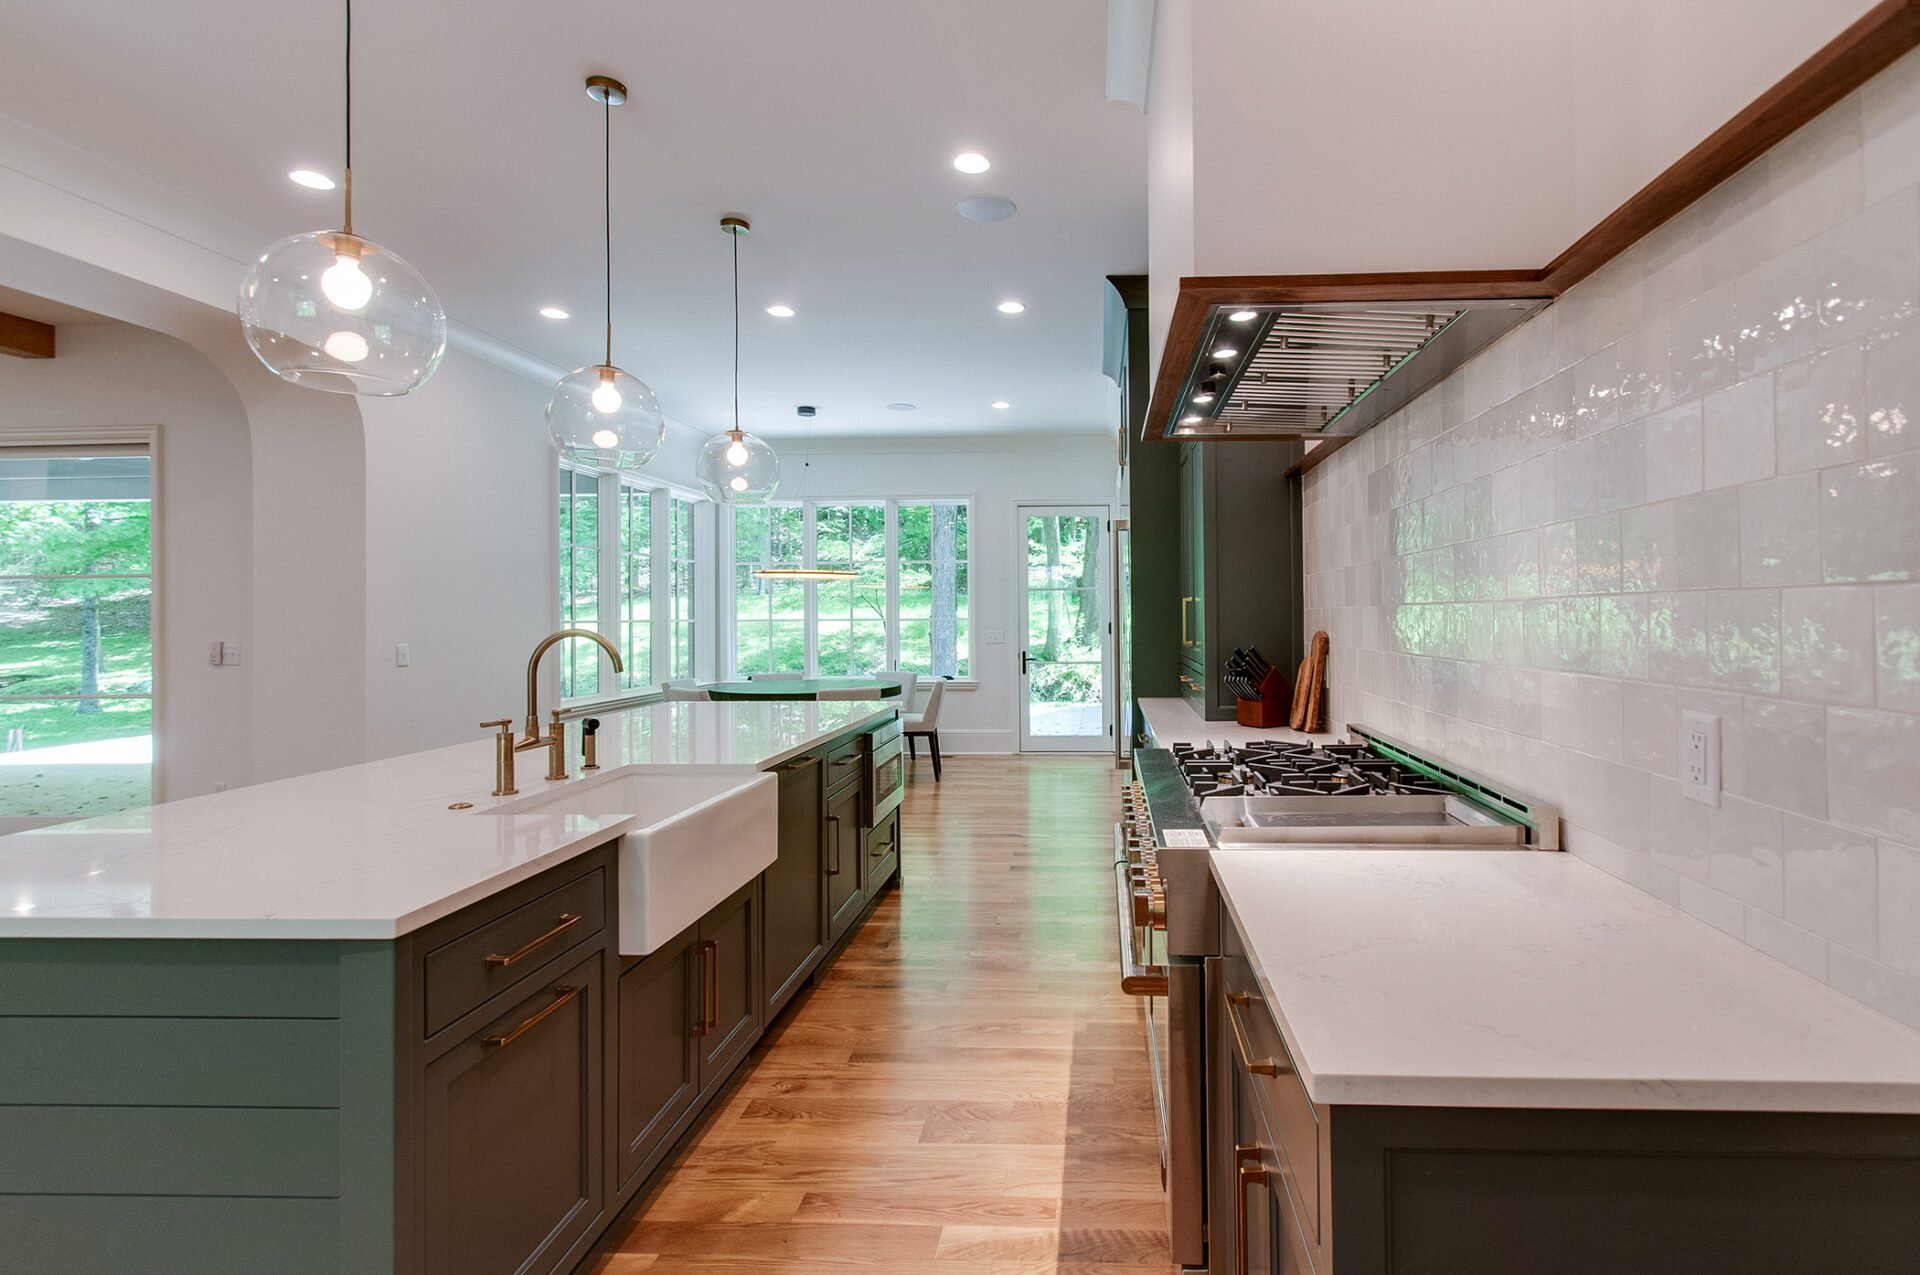 Gold and green luxury kitchen improvement in Nashville, TN